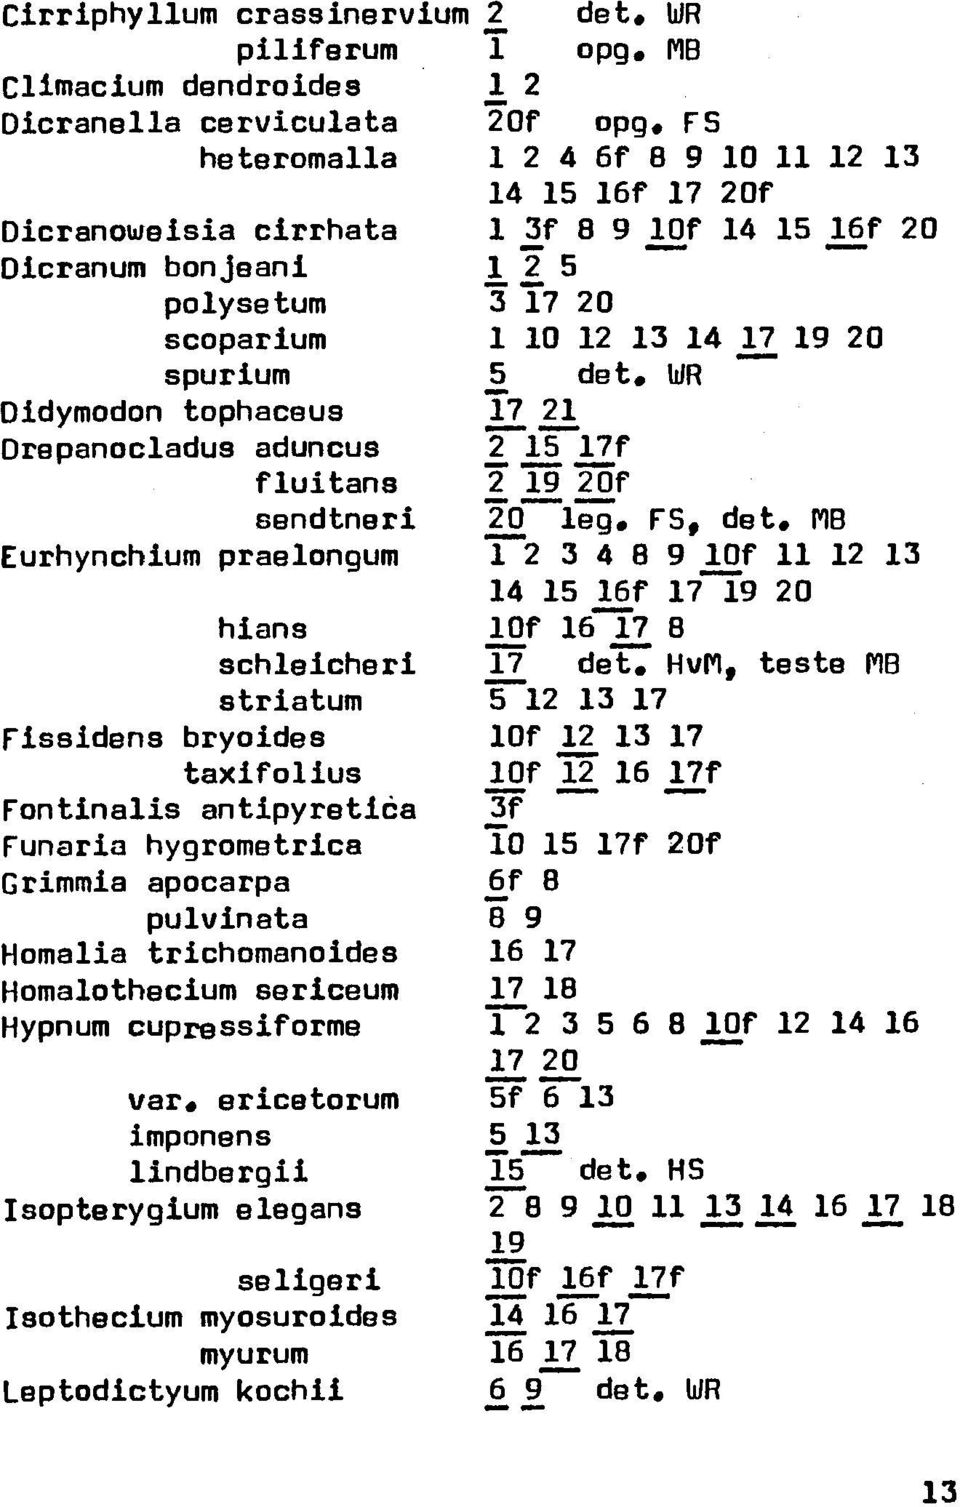 WR Didymodon tophacaus JF7 21_ Drapanocladus aduncus _2 _15 17f fluitans 2 1_9 20f sendtnari 2CI leg, FS, det.